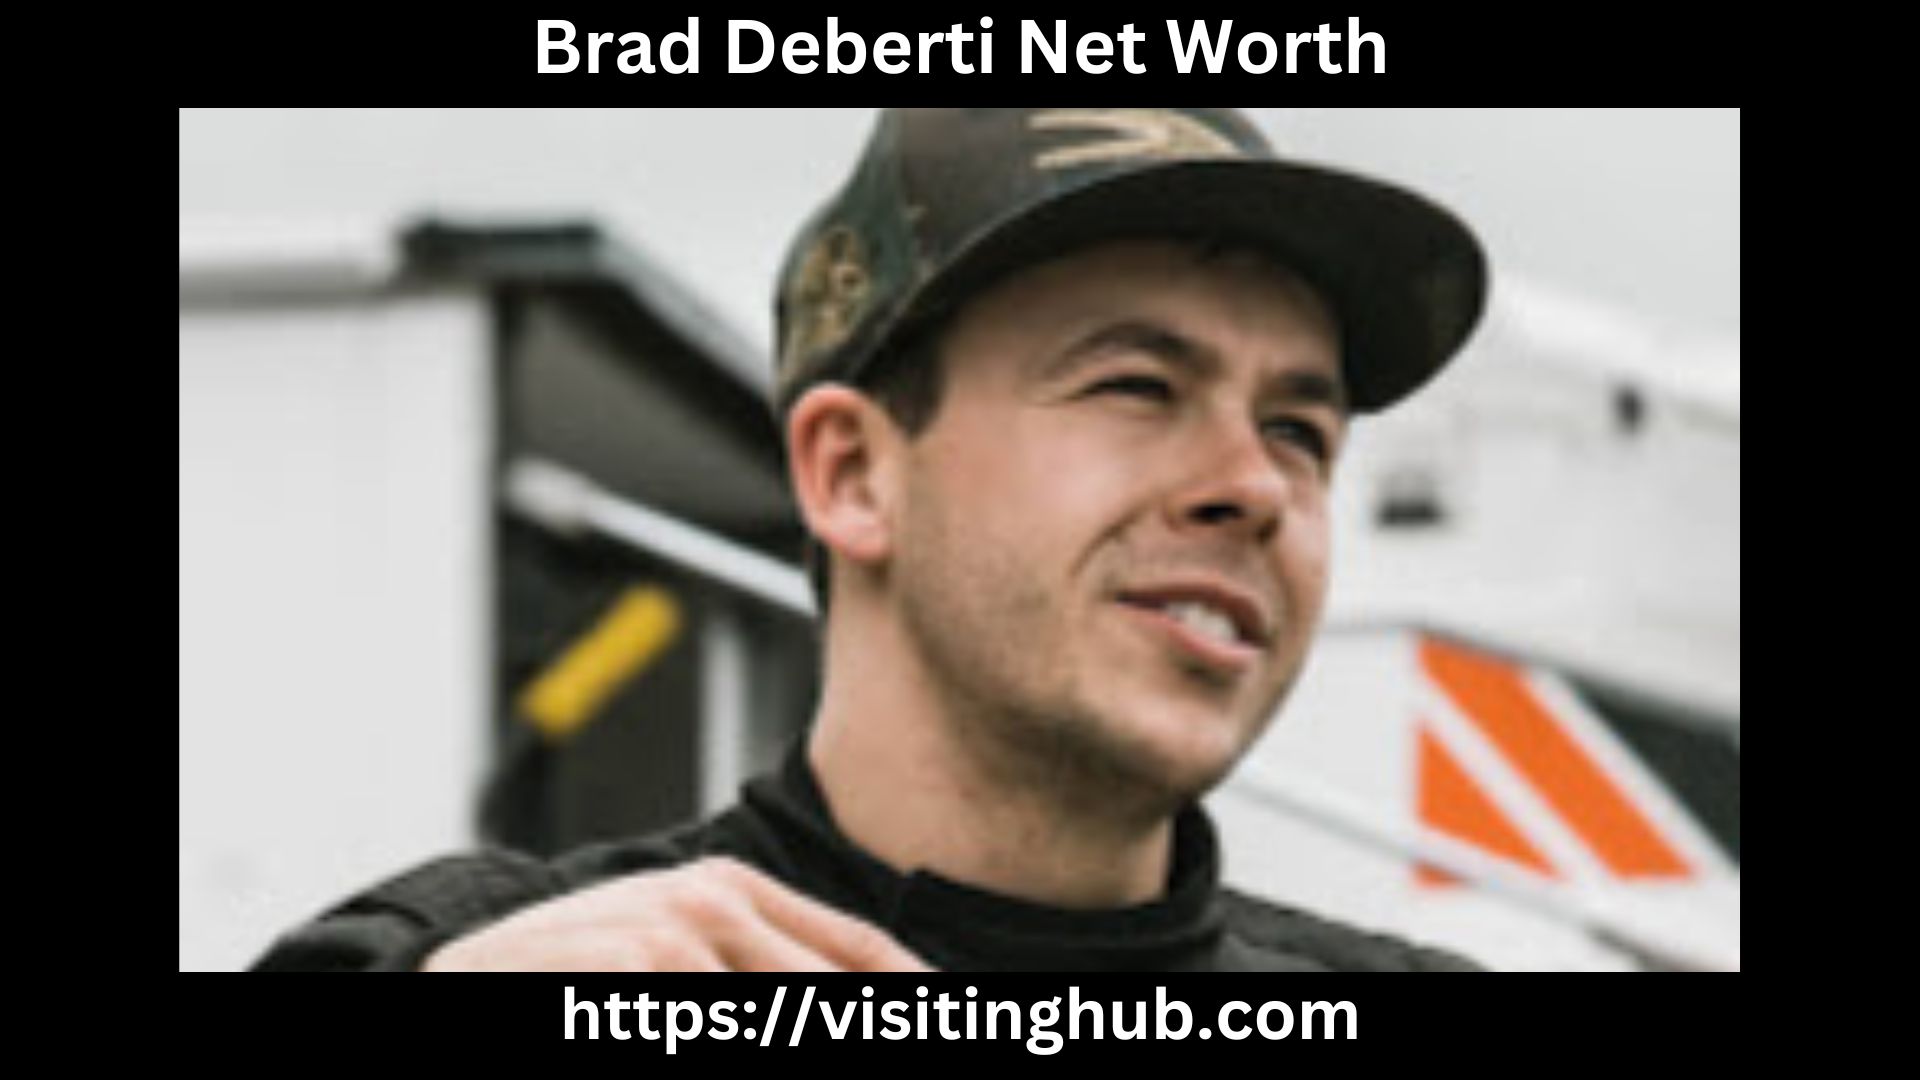 Brad Deberti Net Worth